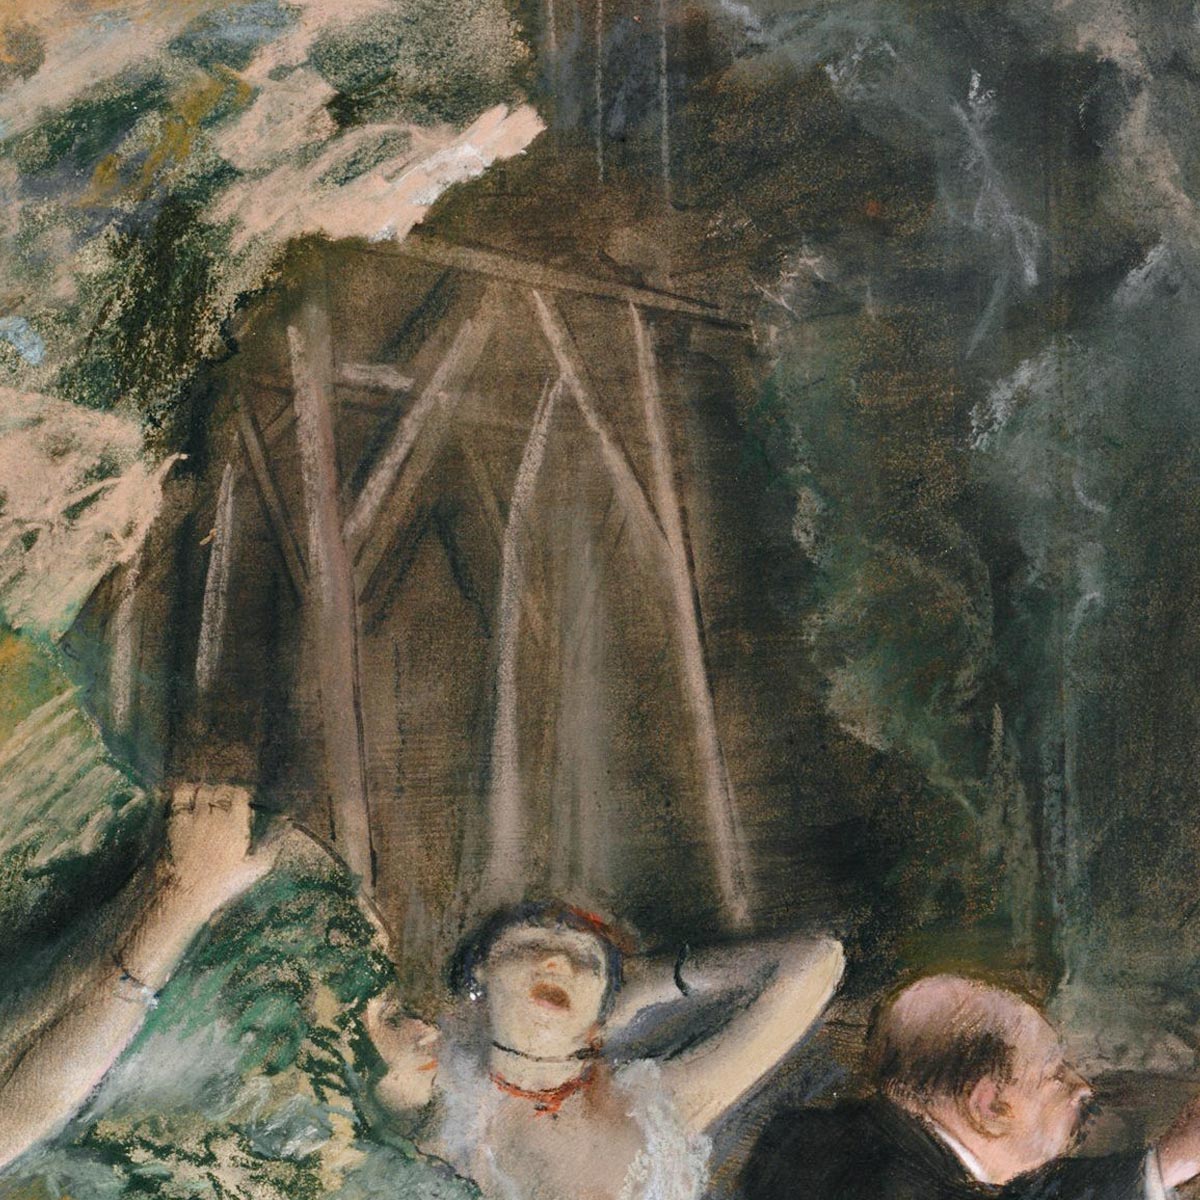 The Rehearsal Onstage Art Print by Edgar Degas